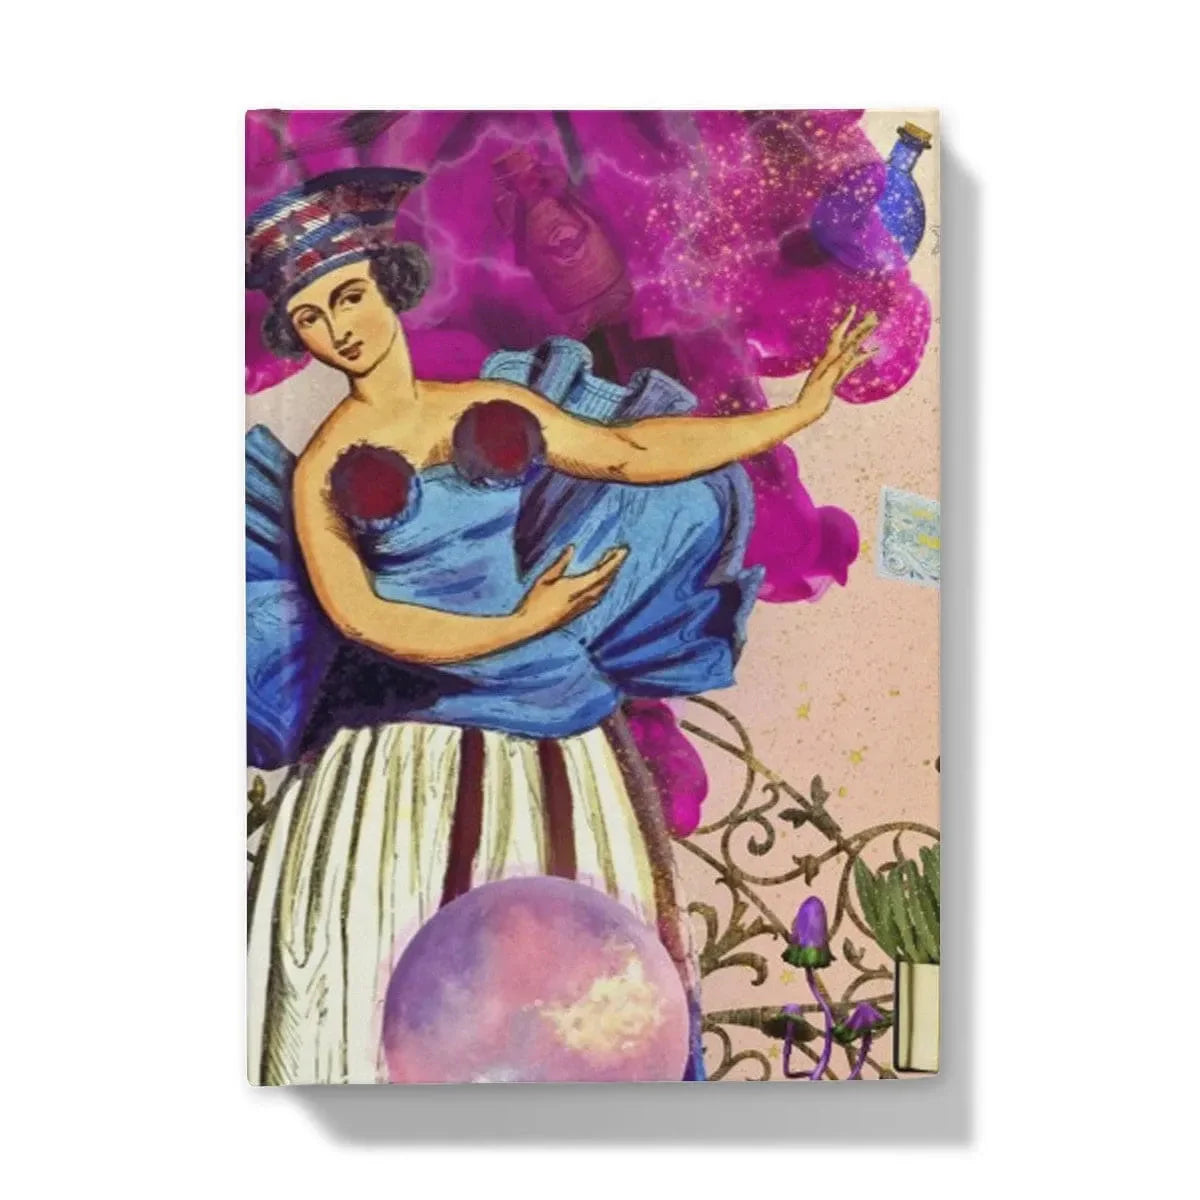 Darla The Divine Hardback Journal - 5’x7’ / 5’ x 7’ - Lined Paper - Calendars Organizers & Planners - Aesthetic Art